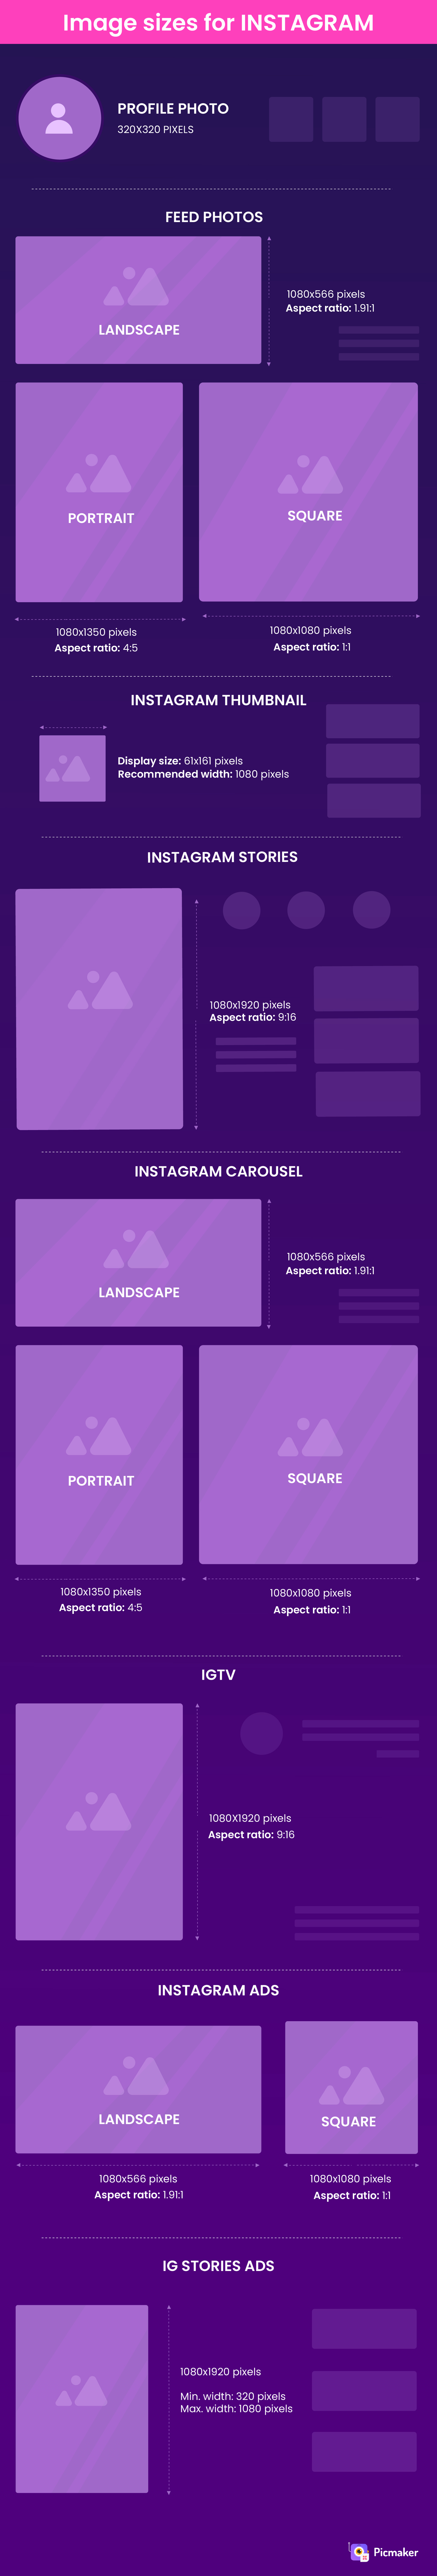 Instagram image sizes infographic